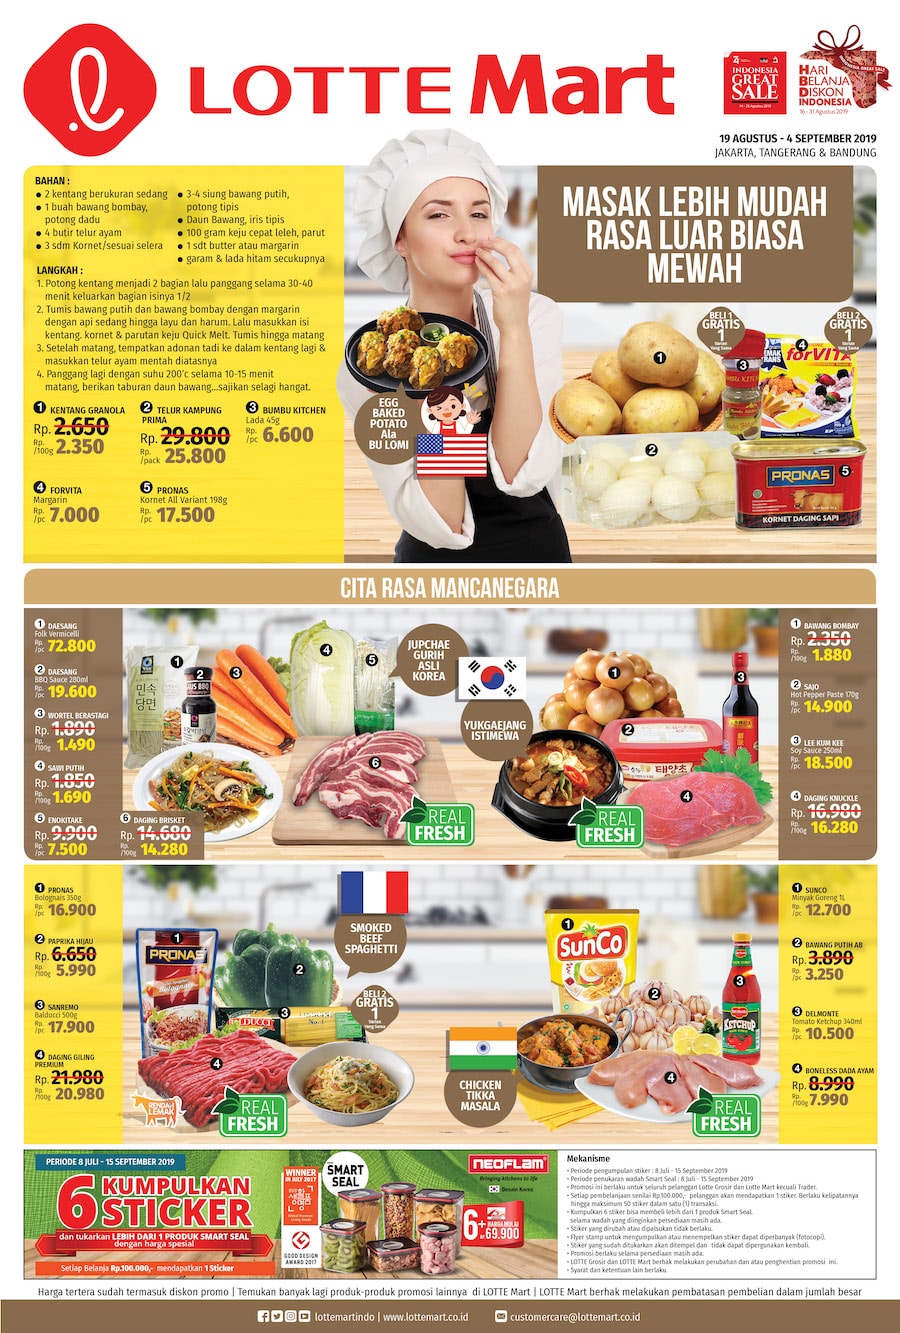 promo makanan lottemart 19 agustus 4 september 2019